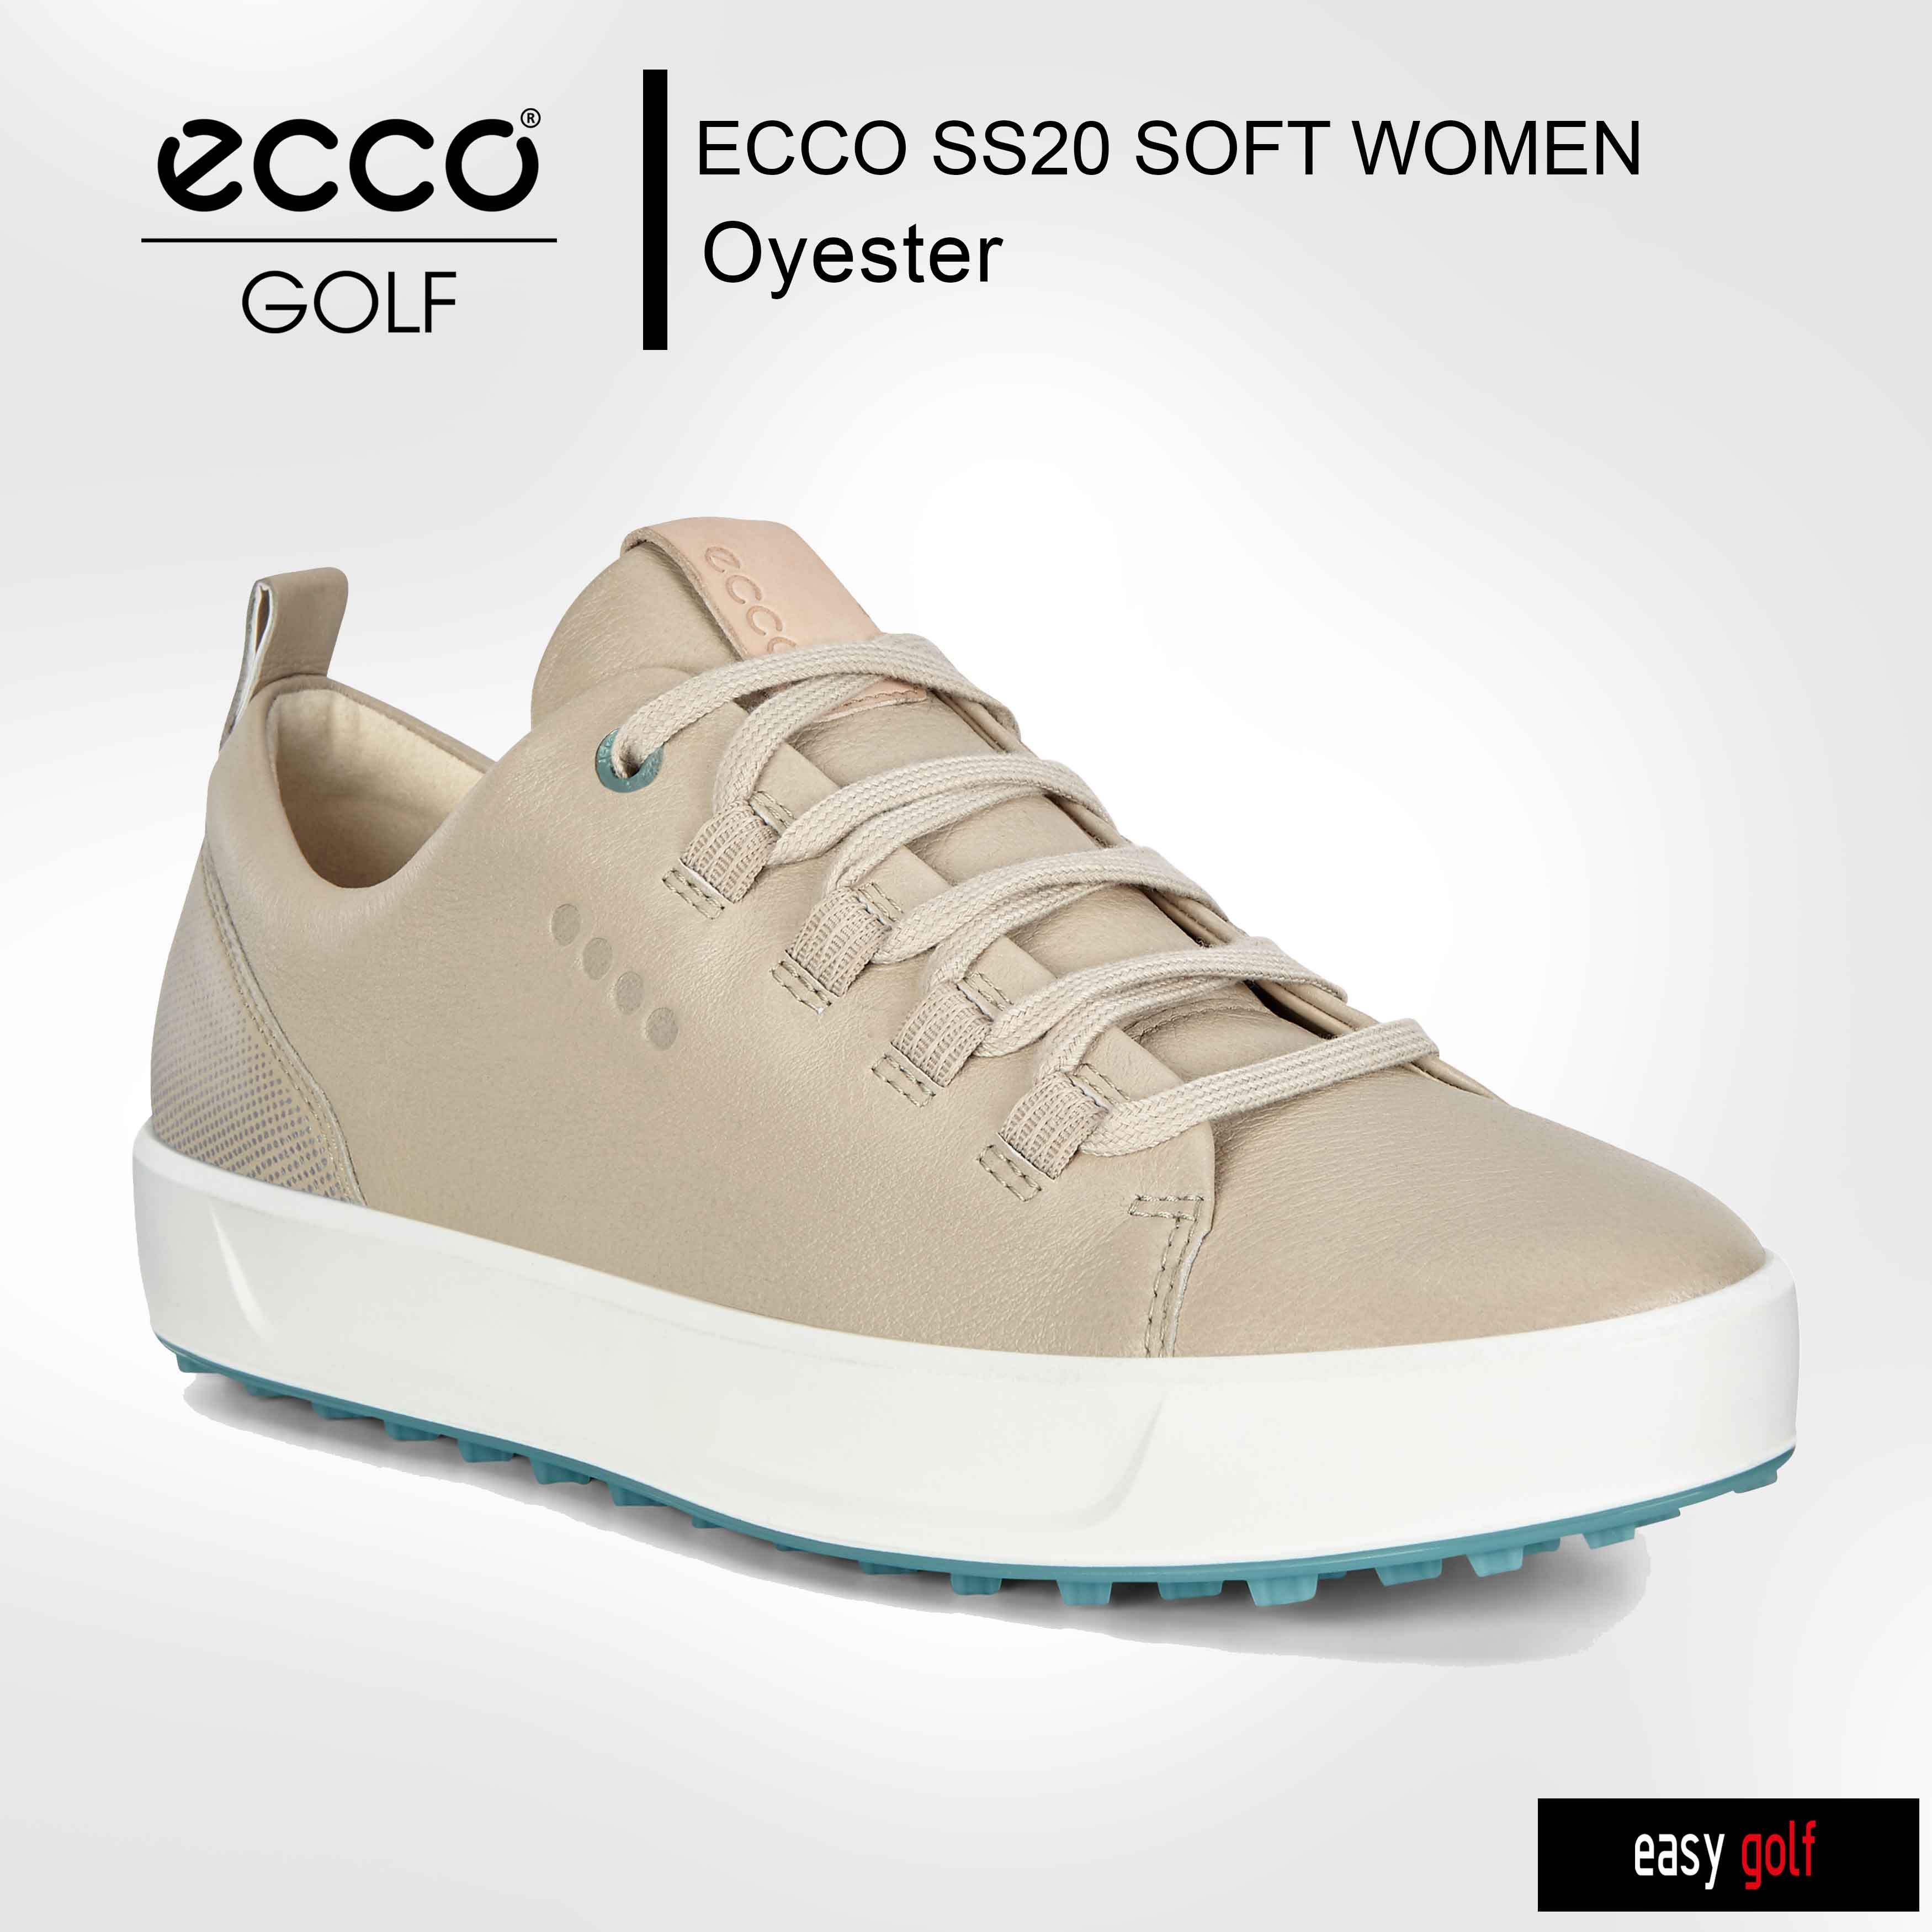 ECCO GOLF รองเท้ากอล์ฟผู้หญิง รองเท้ากีฬาหญิง Golf Shoes รุ่นSS20 SOFT WOMEN สี Oyester